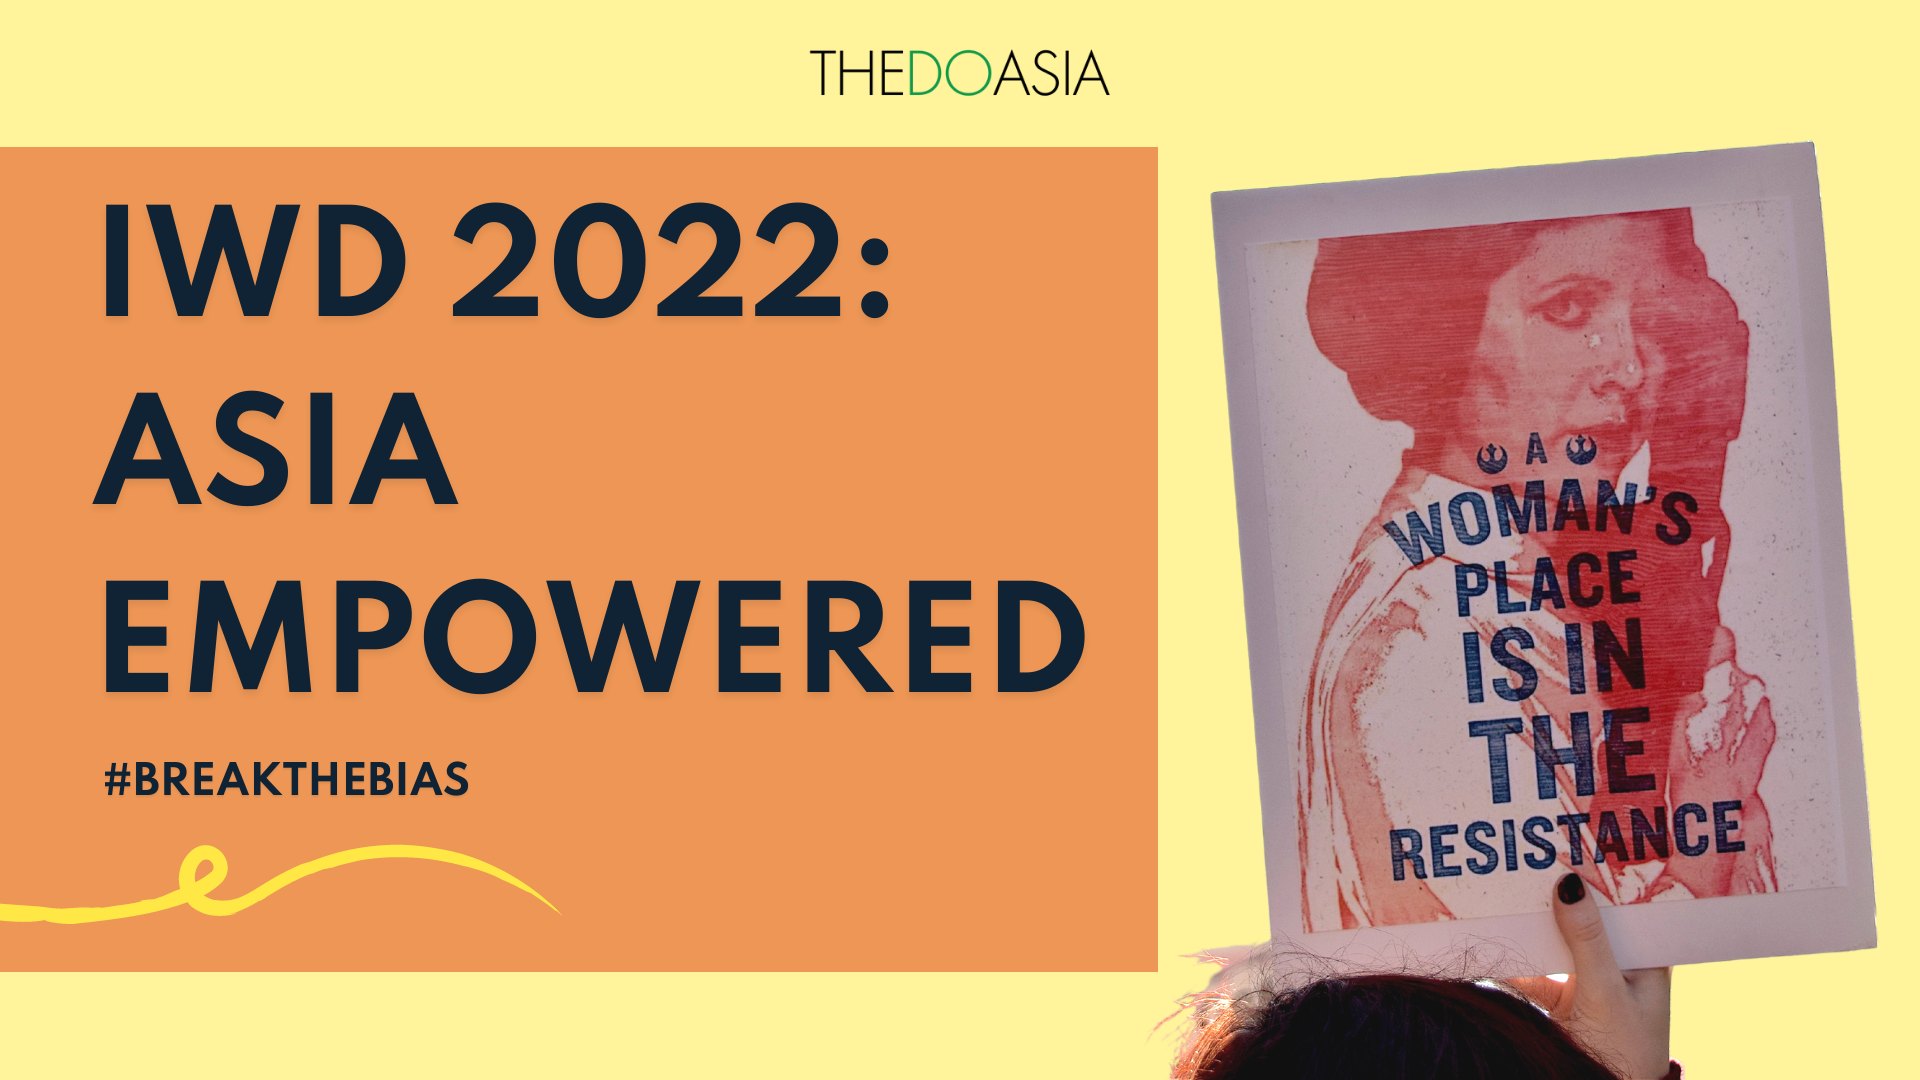 IWD2022 Asia Empowered #breakthebias